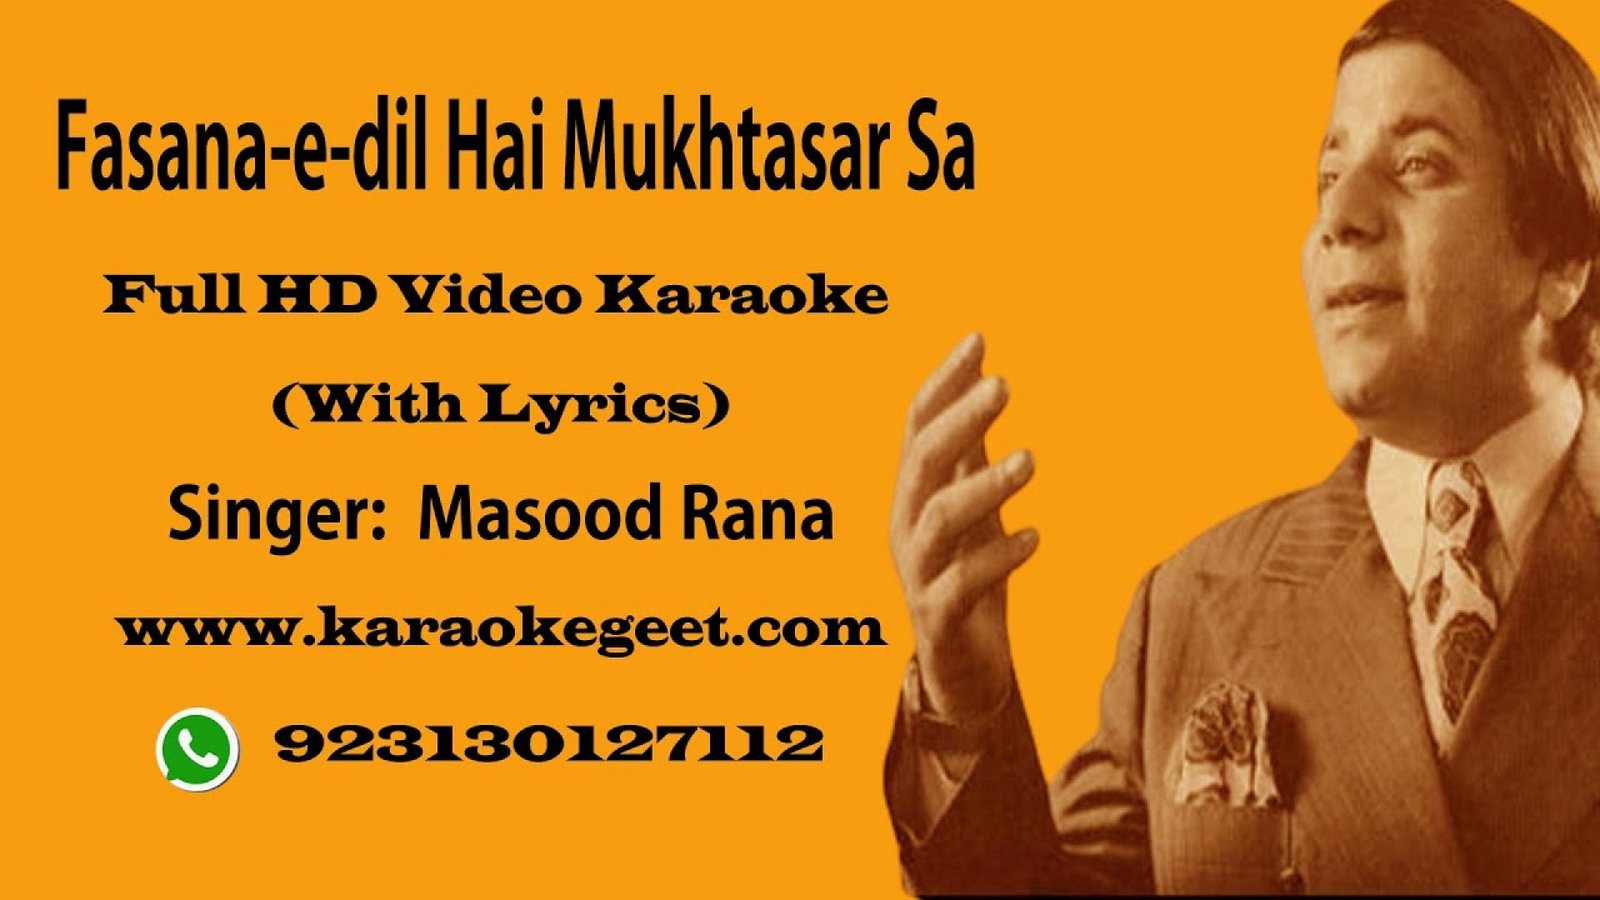 Fasana-e-dil hai mukhtasar sa Video Karaoke